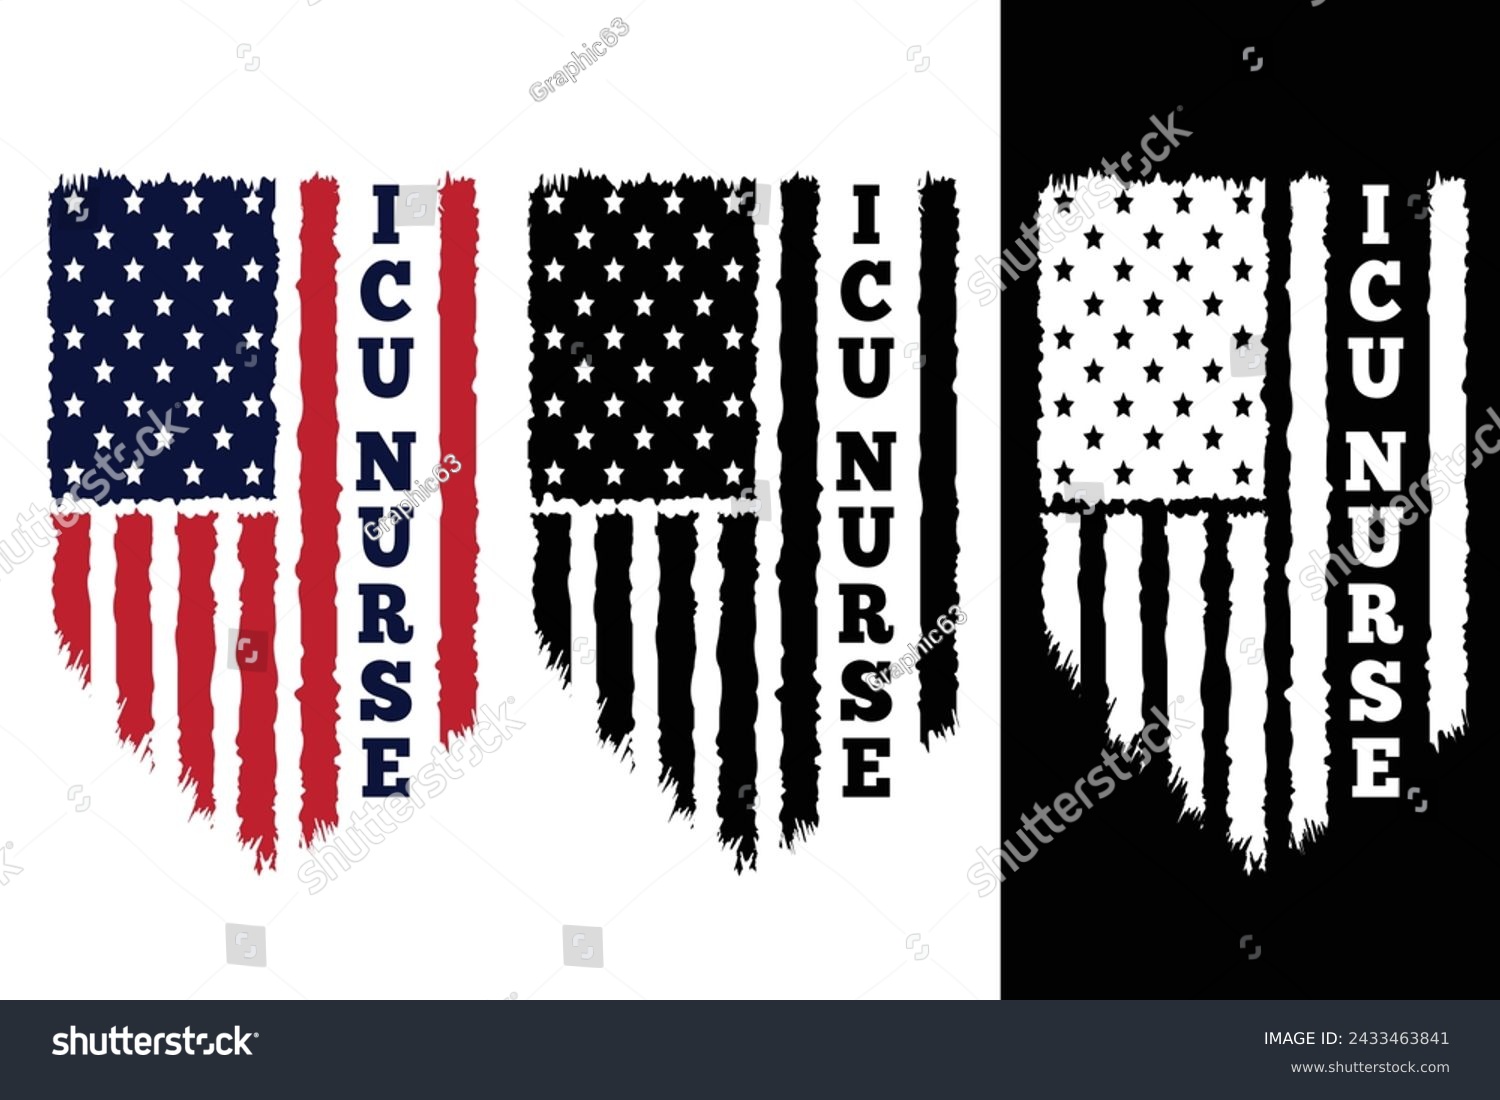 SVG of Icu Nurse Typography Vector. Nurse Distressed American Flag Print For t Shirt,Poster,backround,Banner New Design. svg